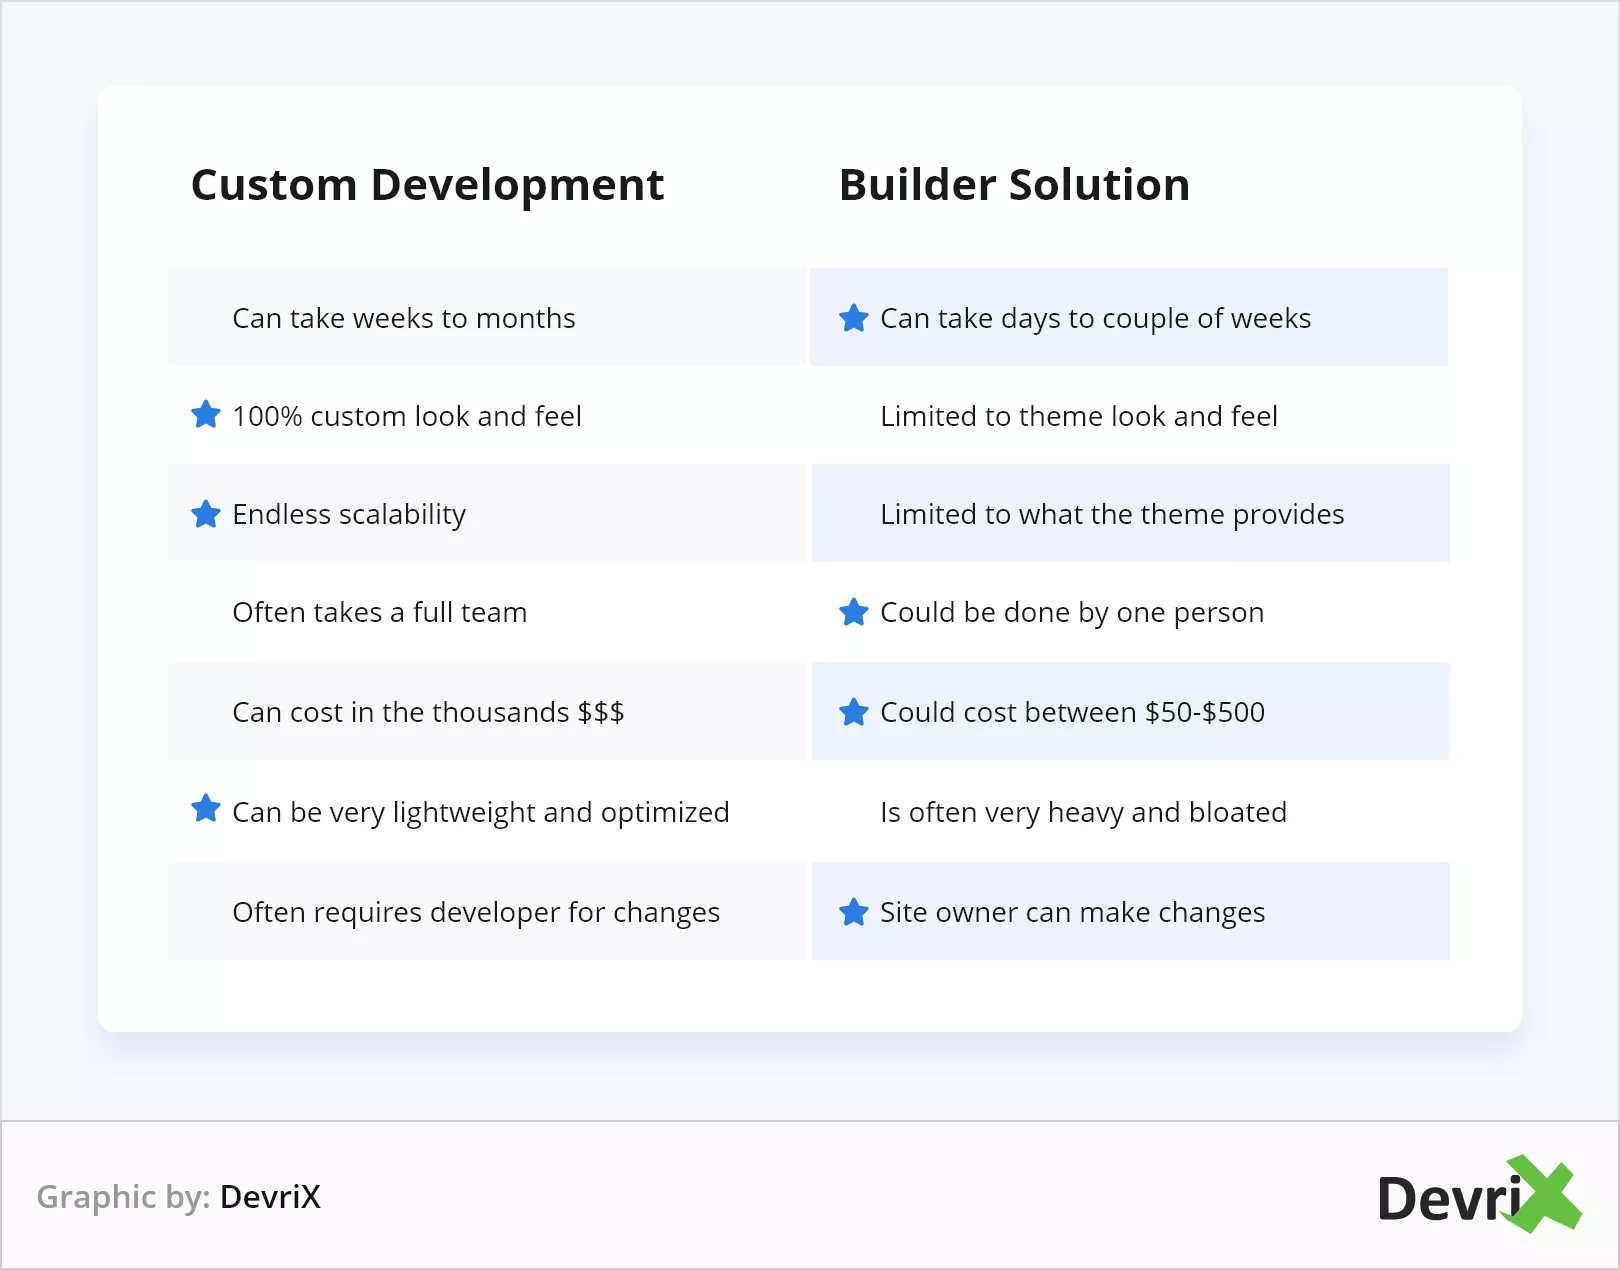 Dezvoltare personalizată vs soluție Builder